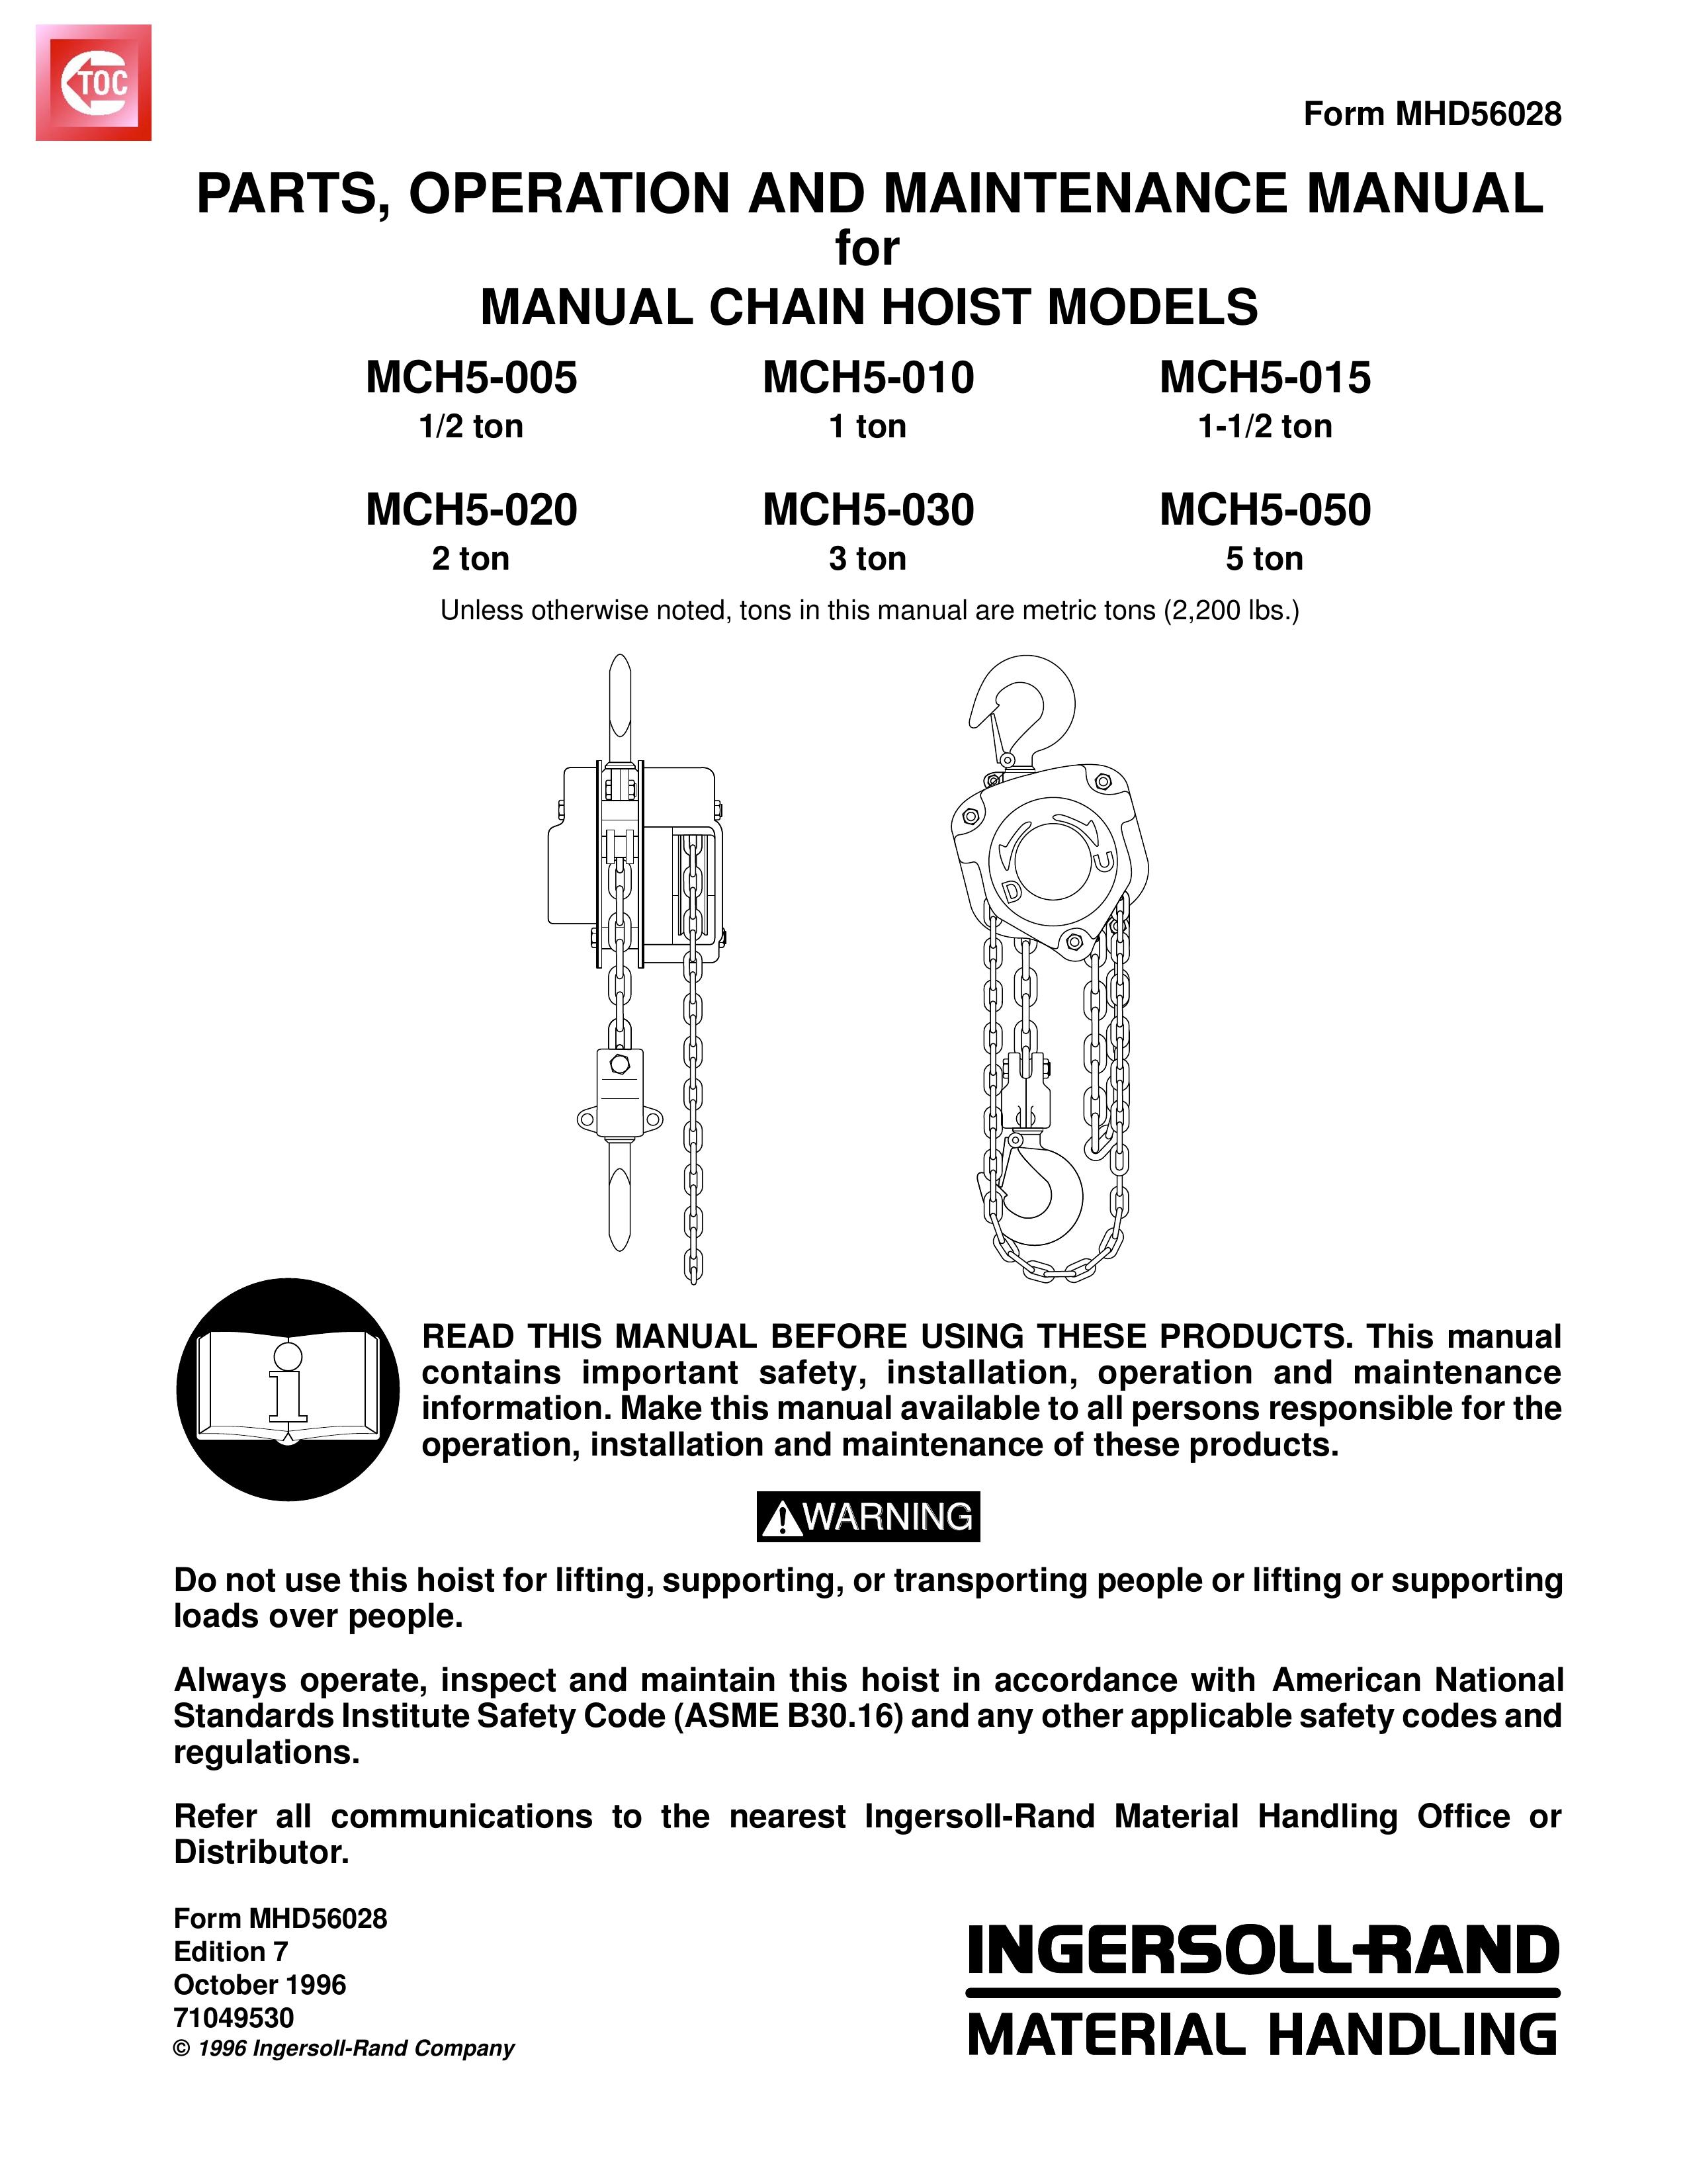 Ingersoll-Rand MCH5-005 Digital Photo Keychain User Manual